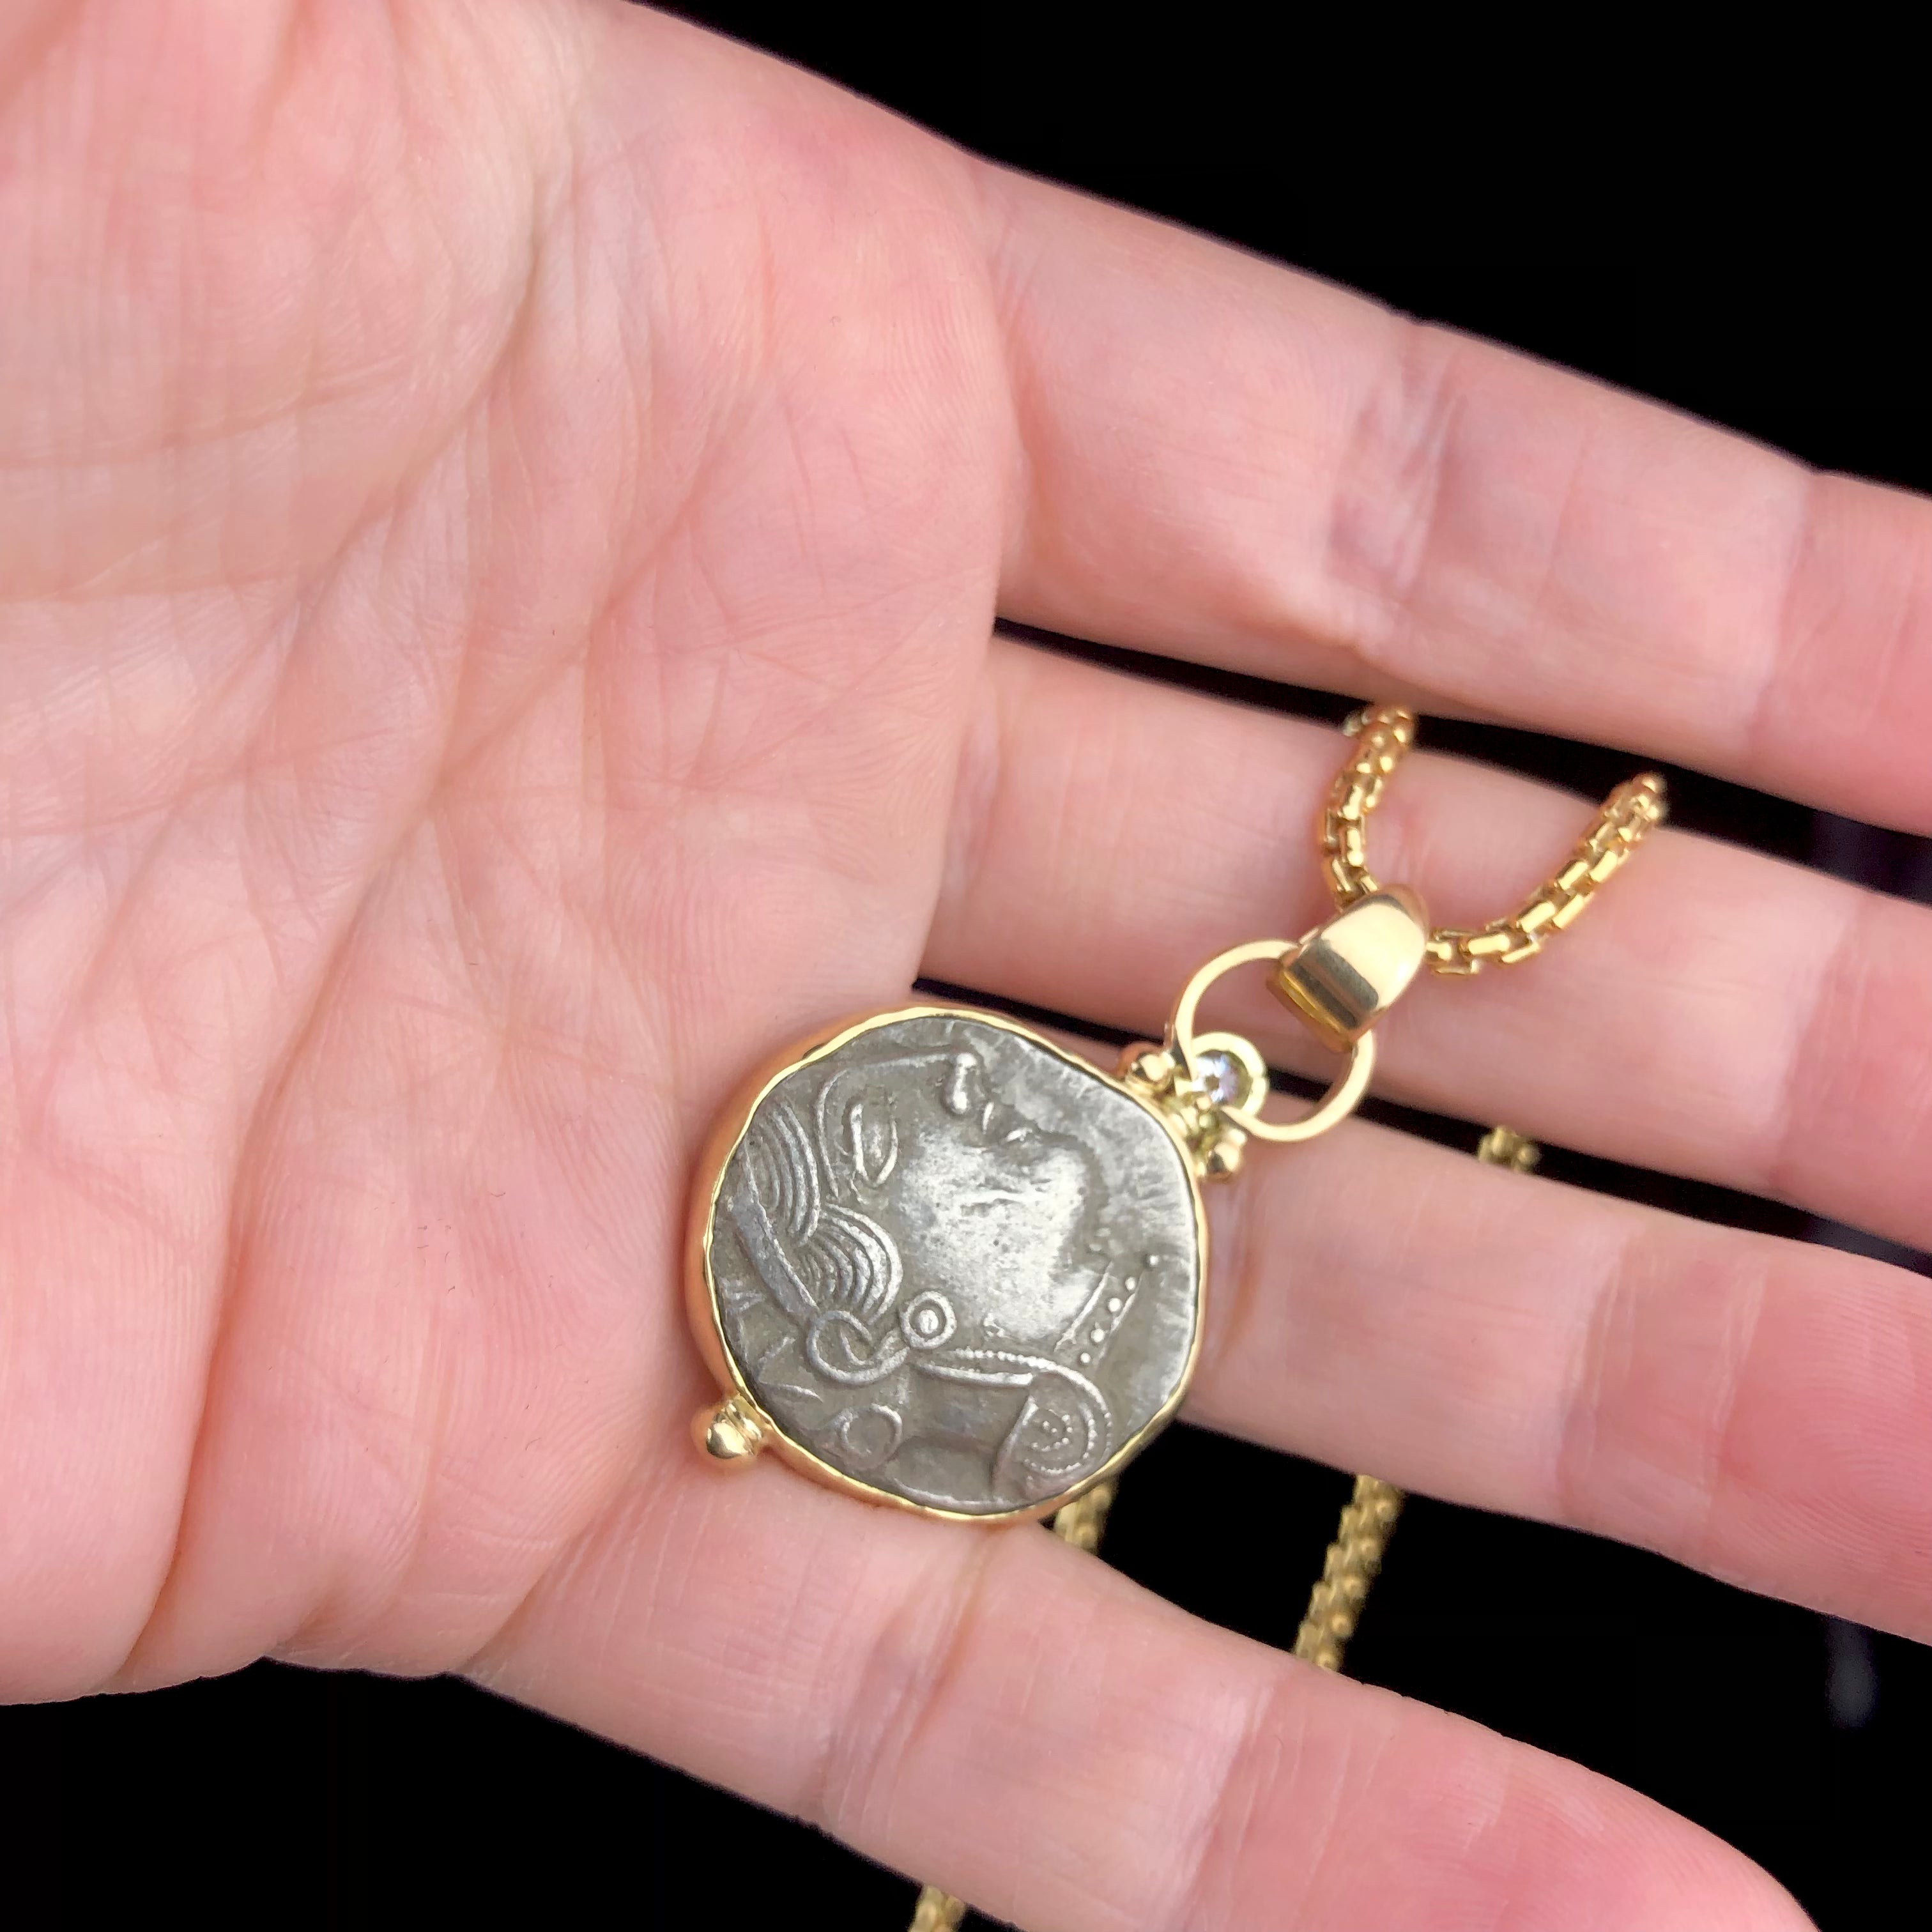 Athena Tetradrachm Coin Pendent shown in hand